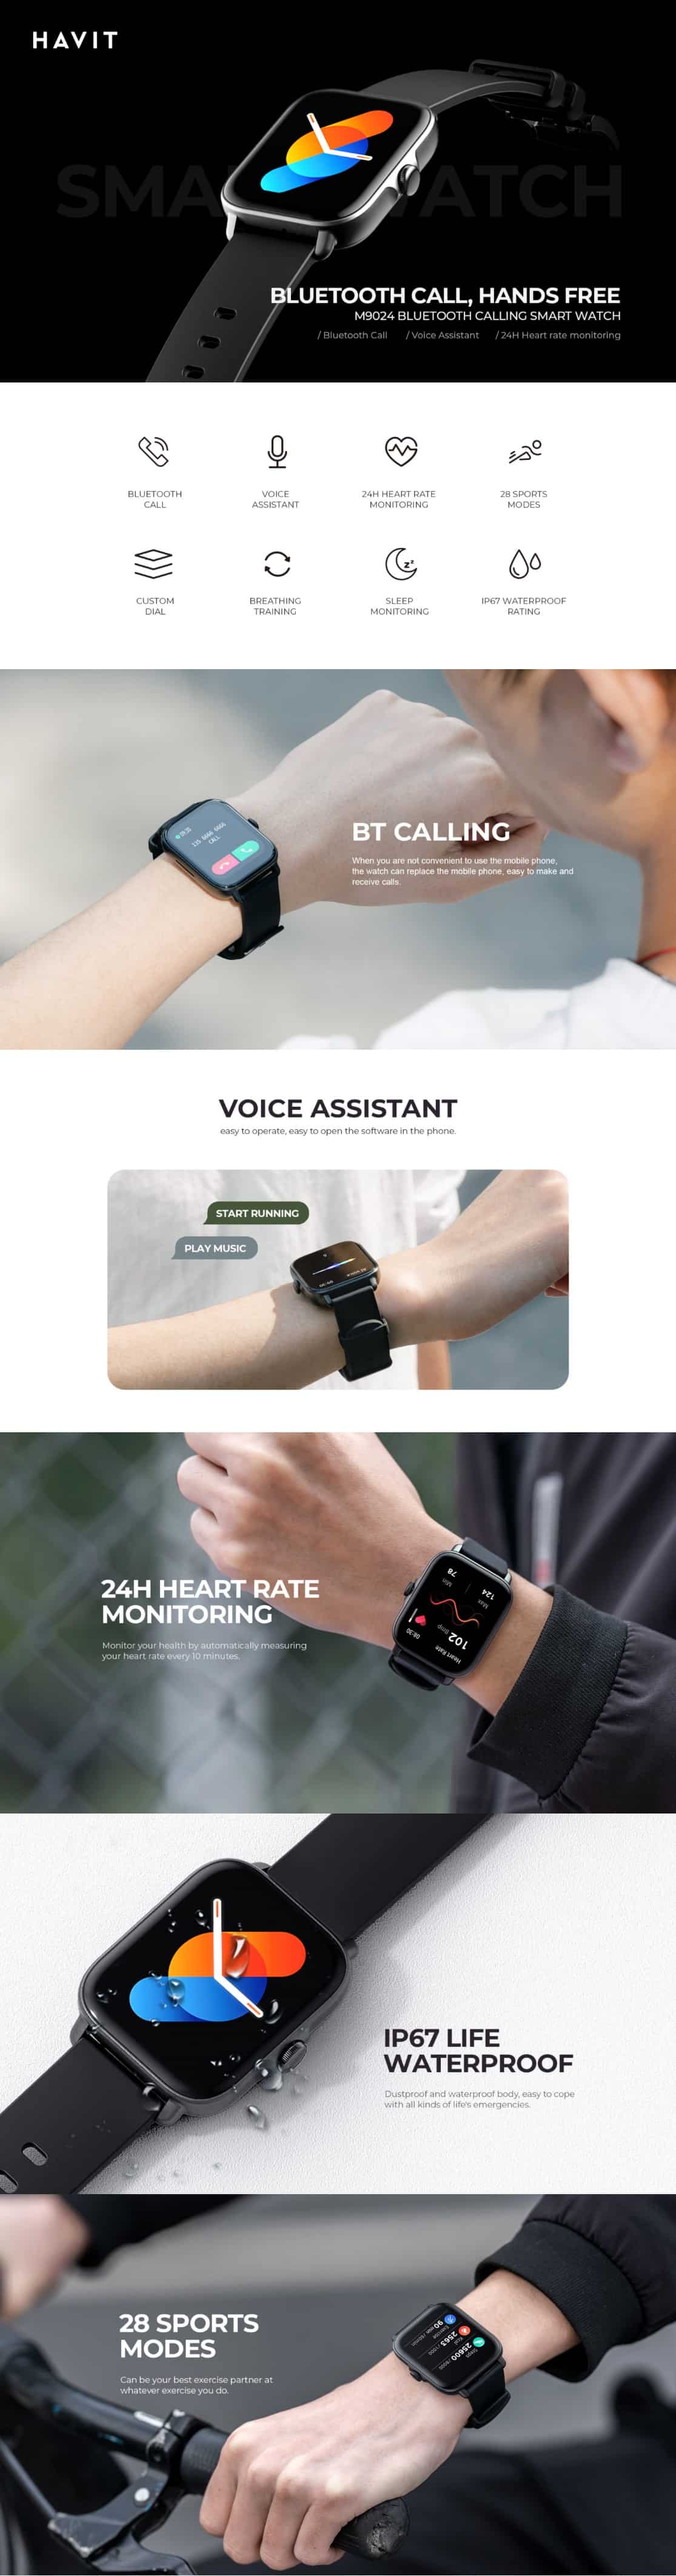 Havit M9024 Bluetooth Calling Smart Watch 5